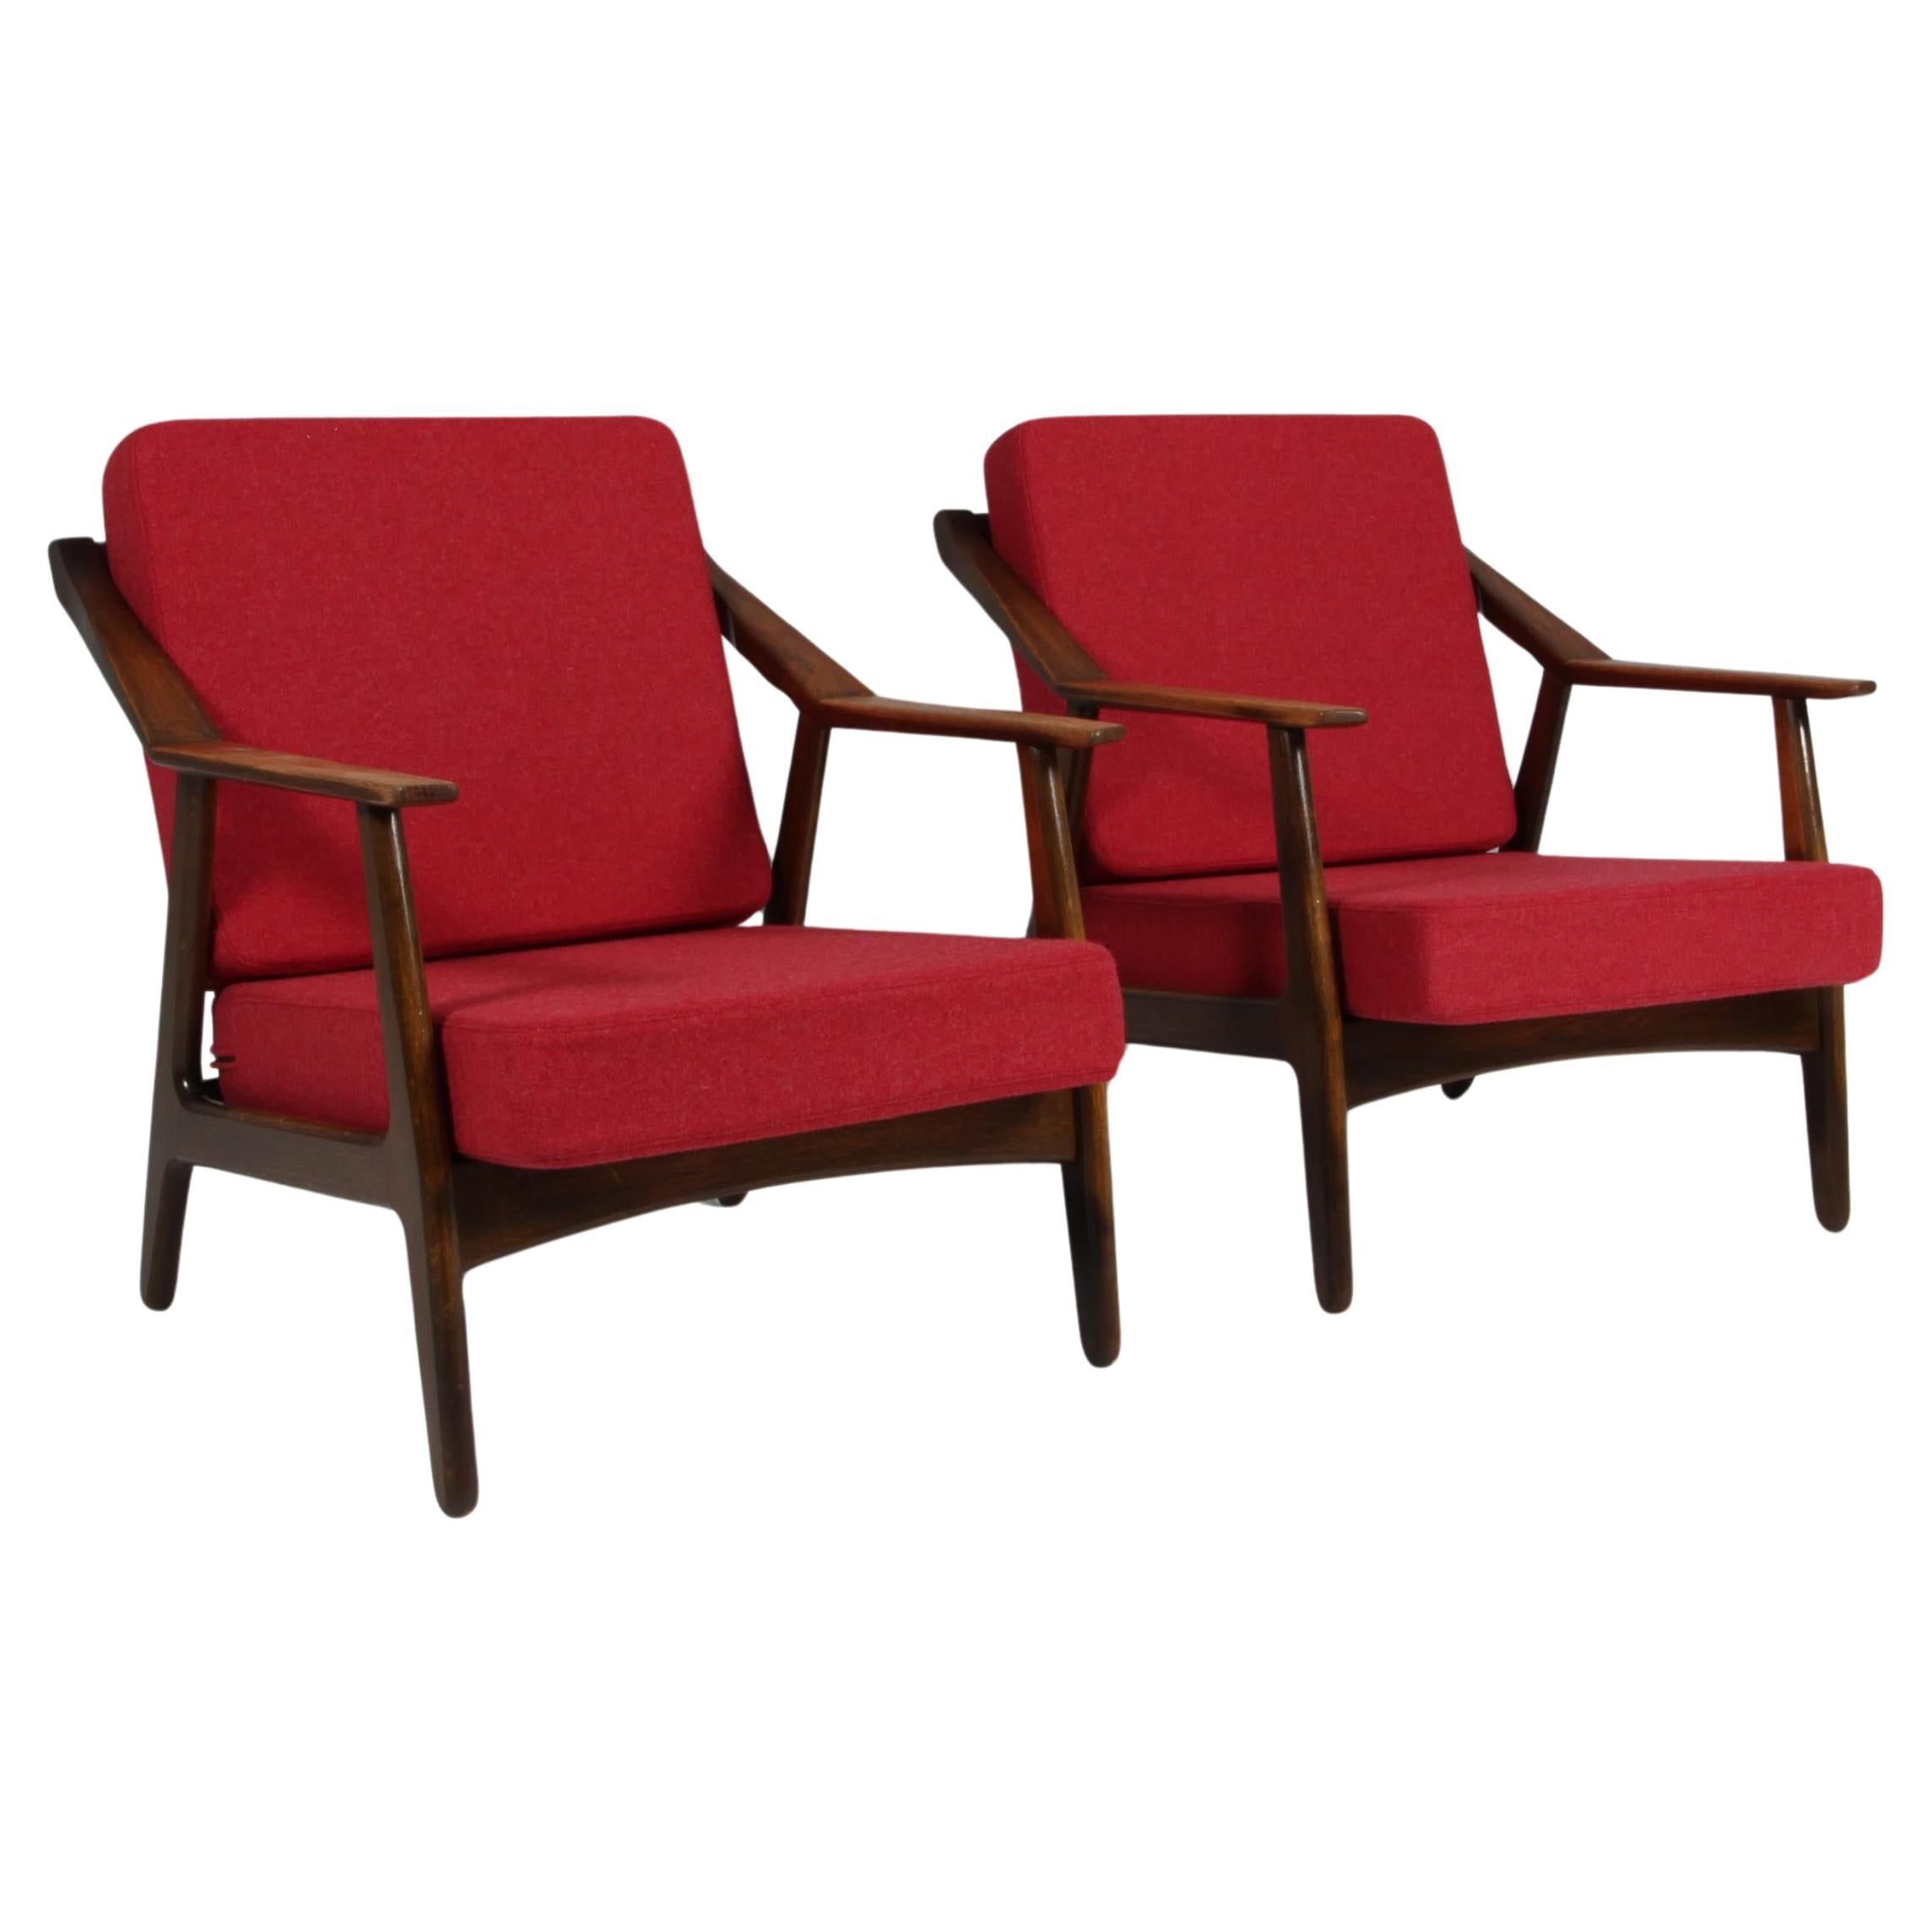 H. Brockmann Petersen pair of Lounge Chairs